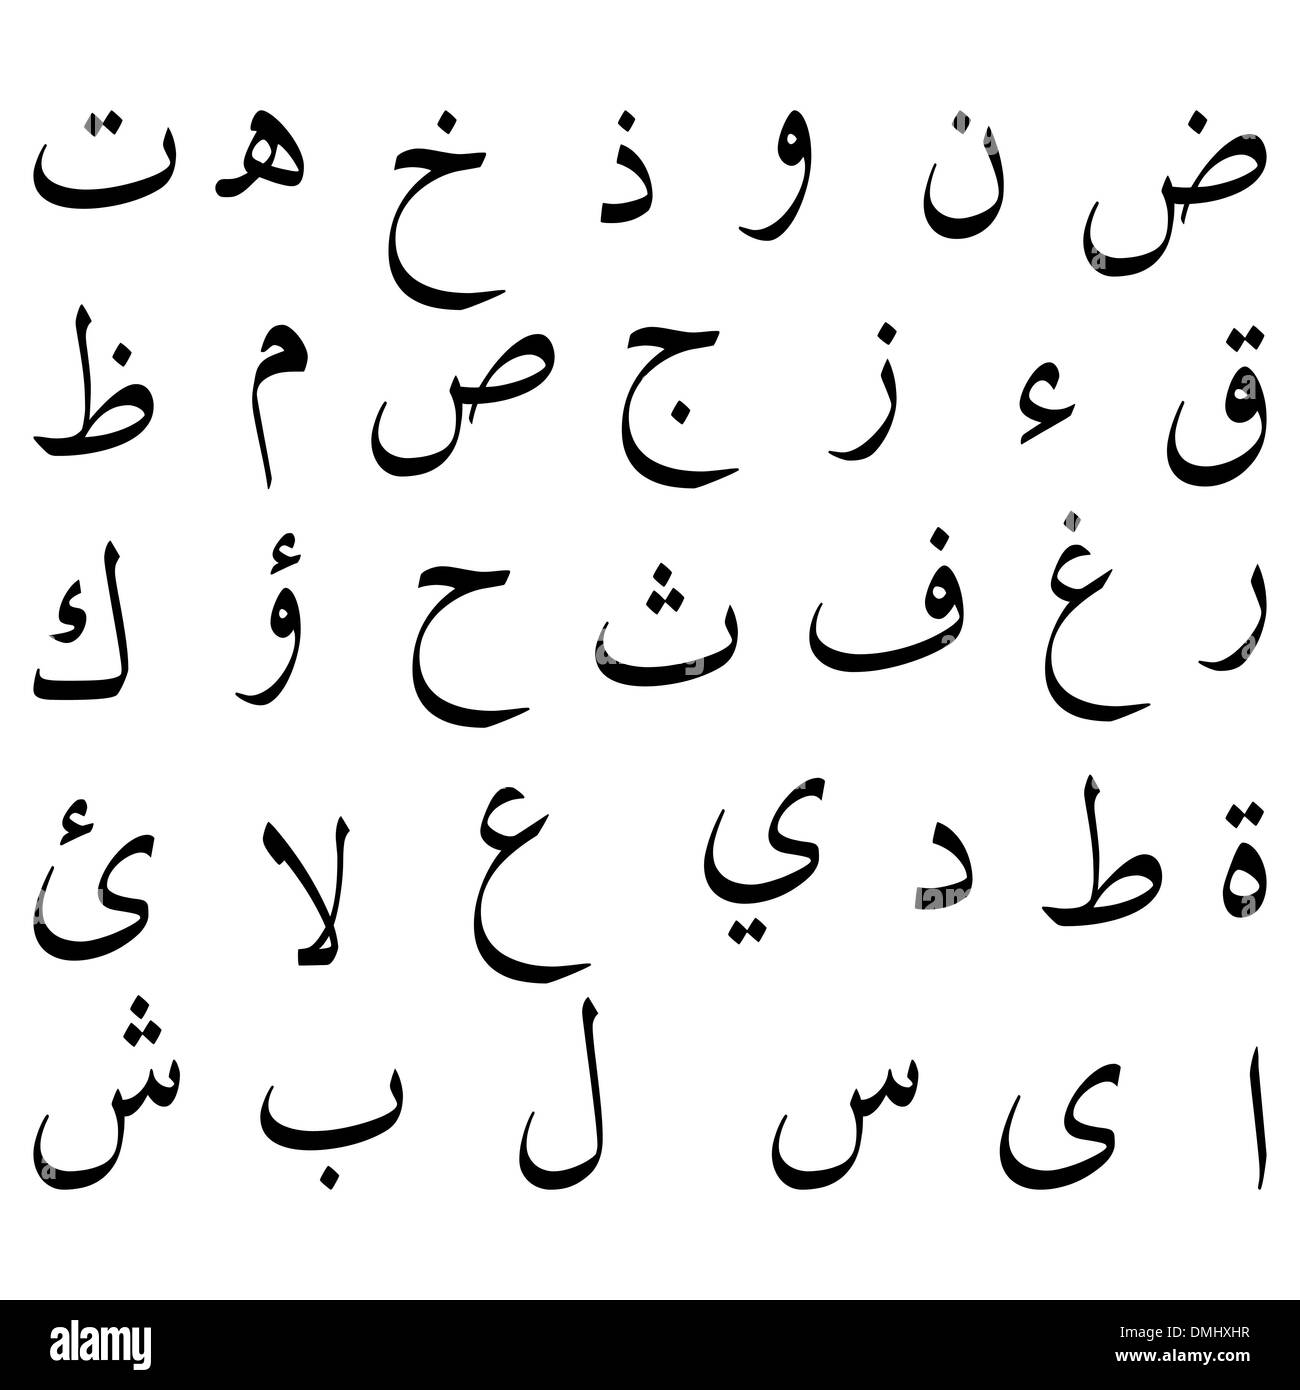 Arabic Alphabet With Words